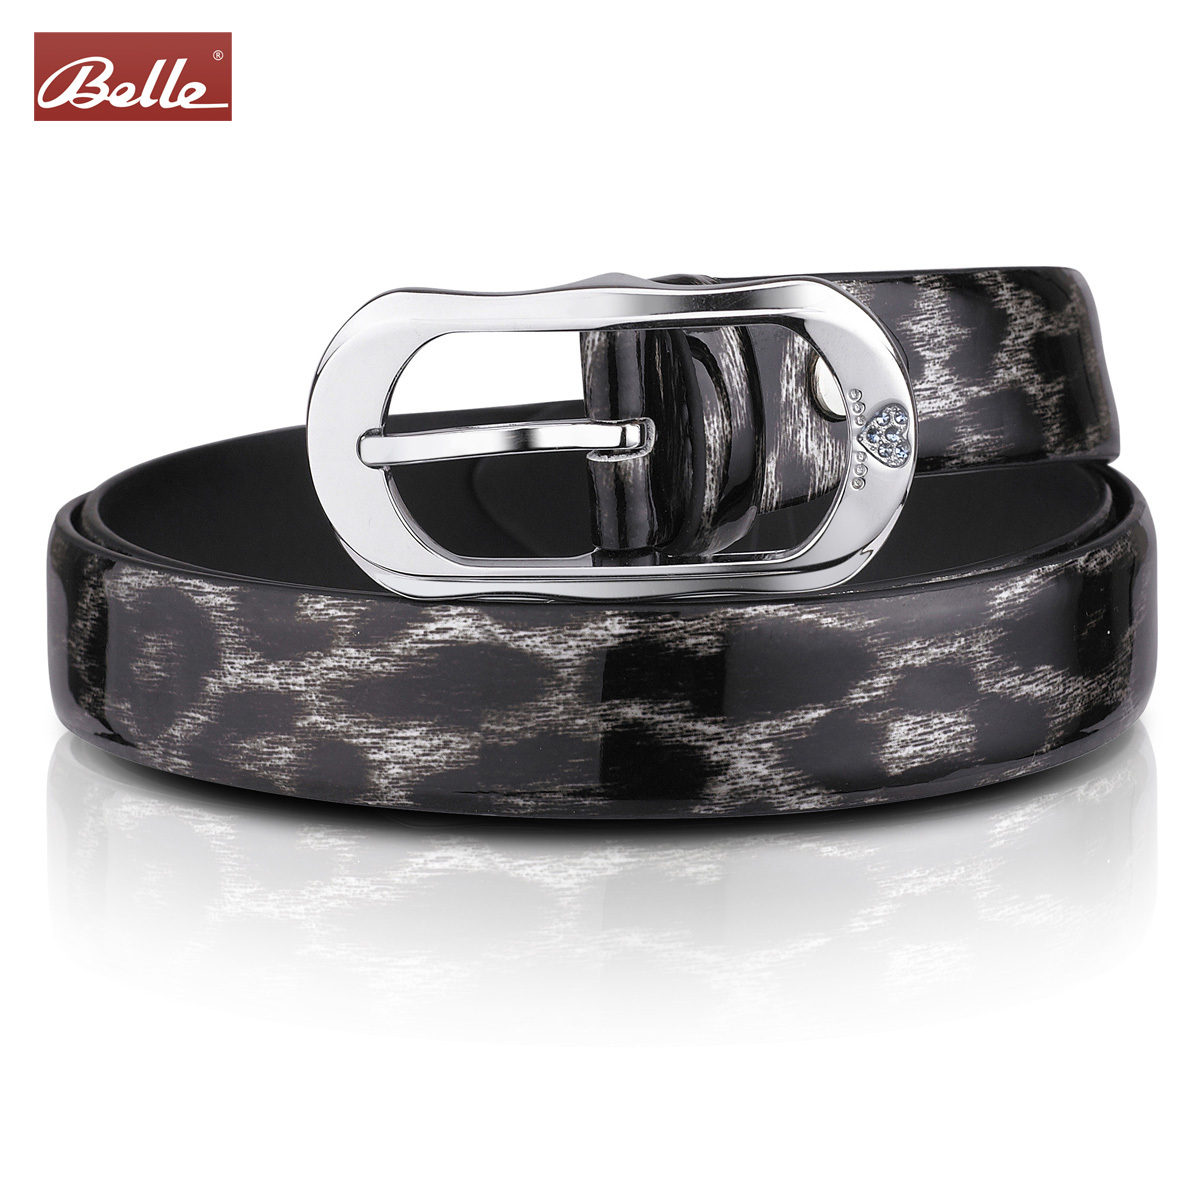 fashion women's genuine leather belt female fashion pin buckle strap love diamond f0849 100% genuine leather belt designer belt